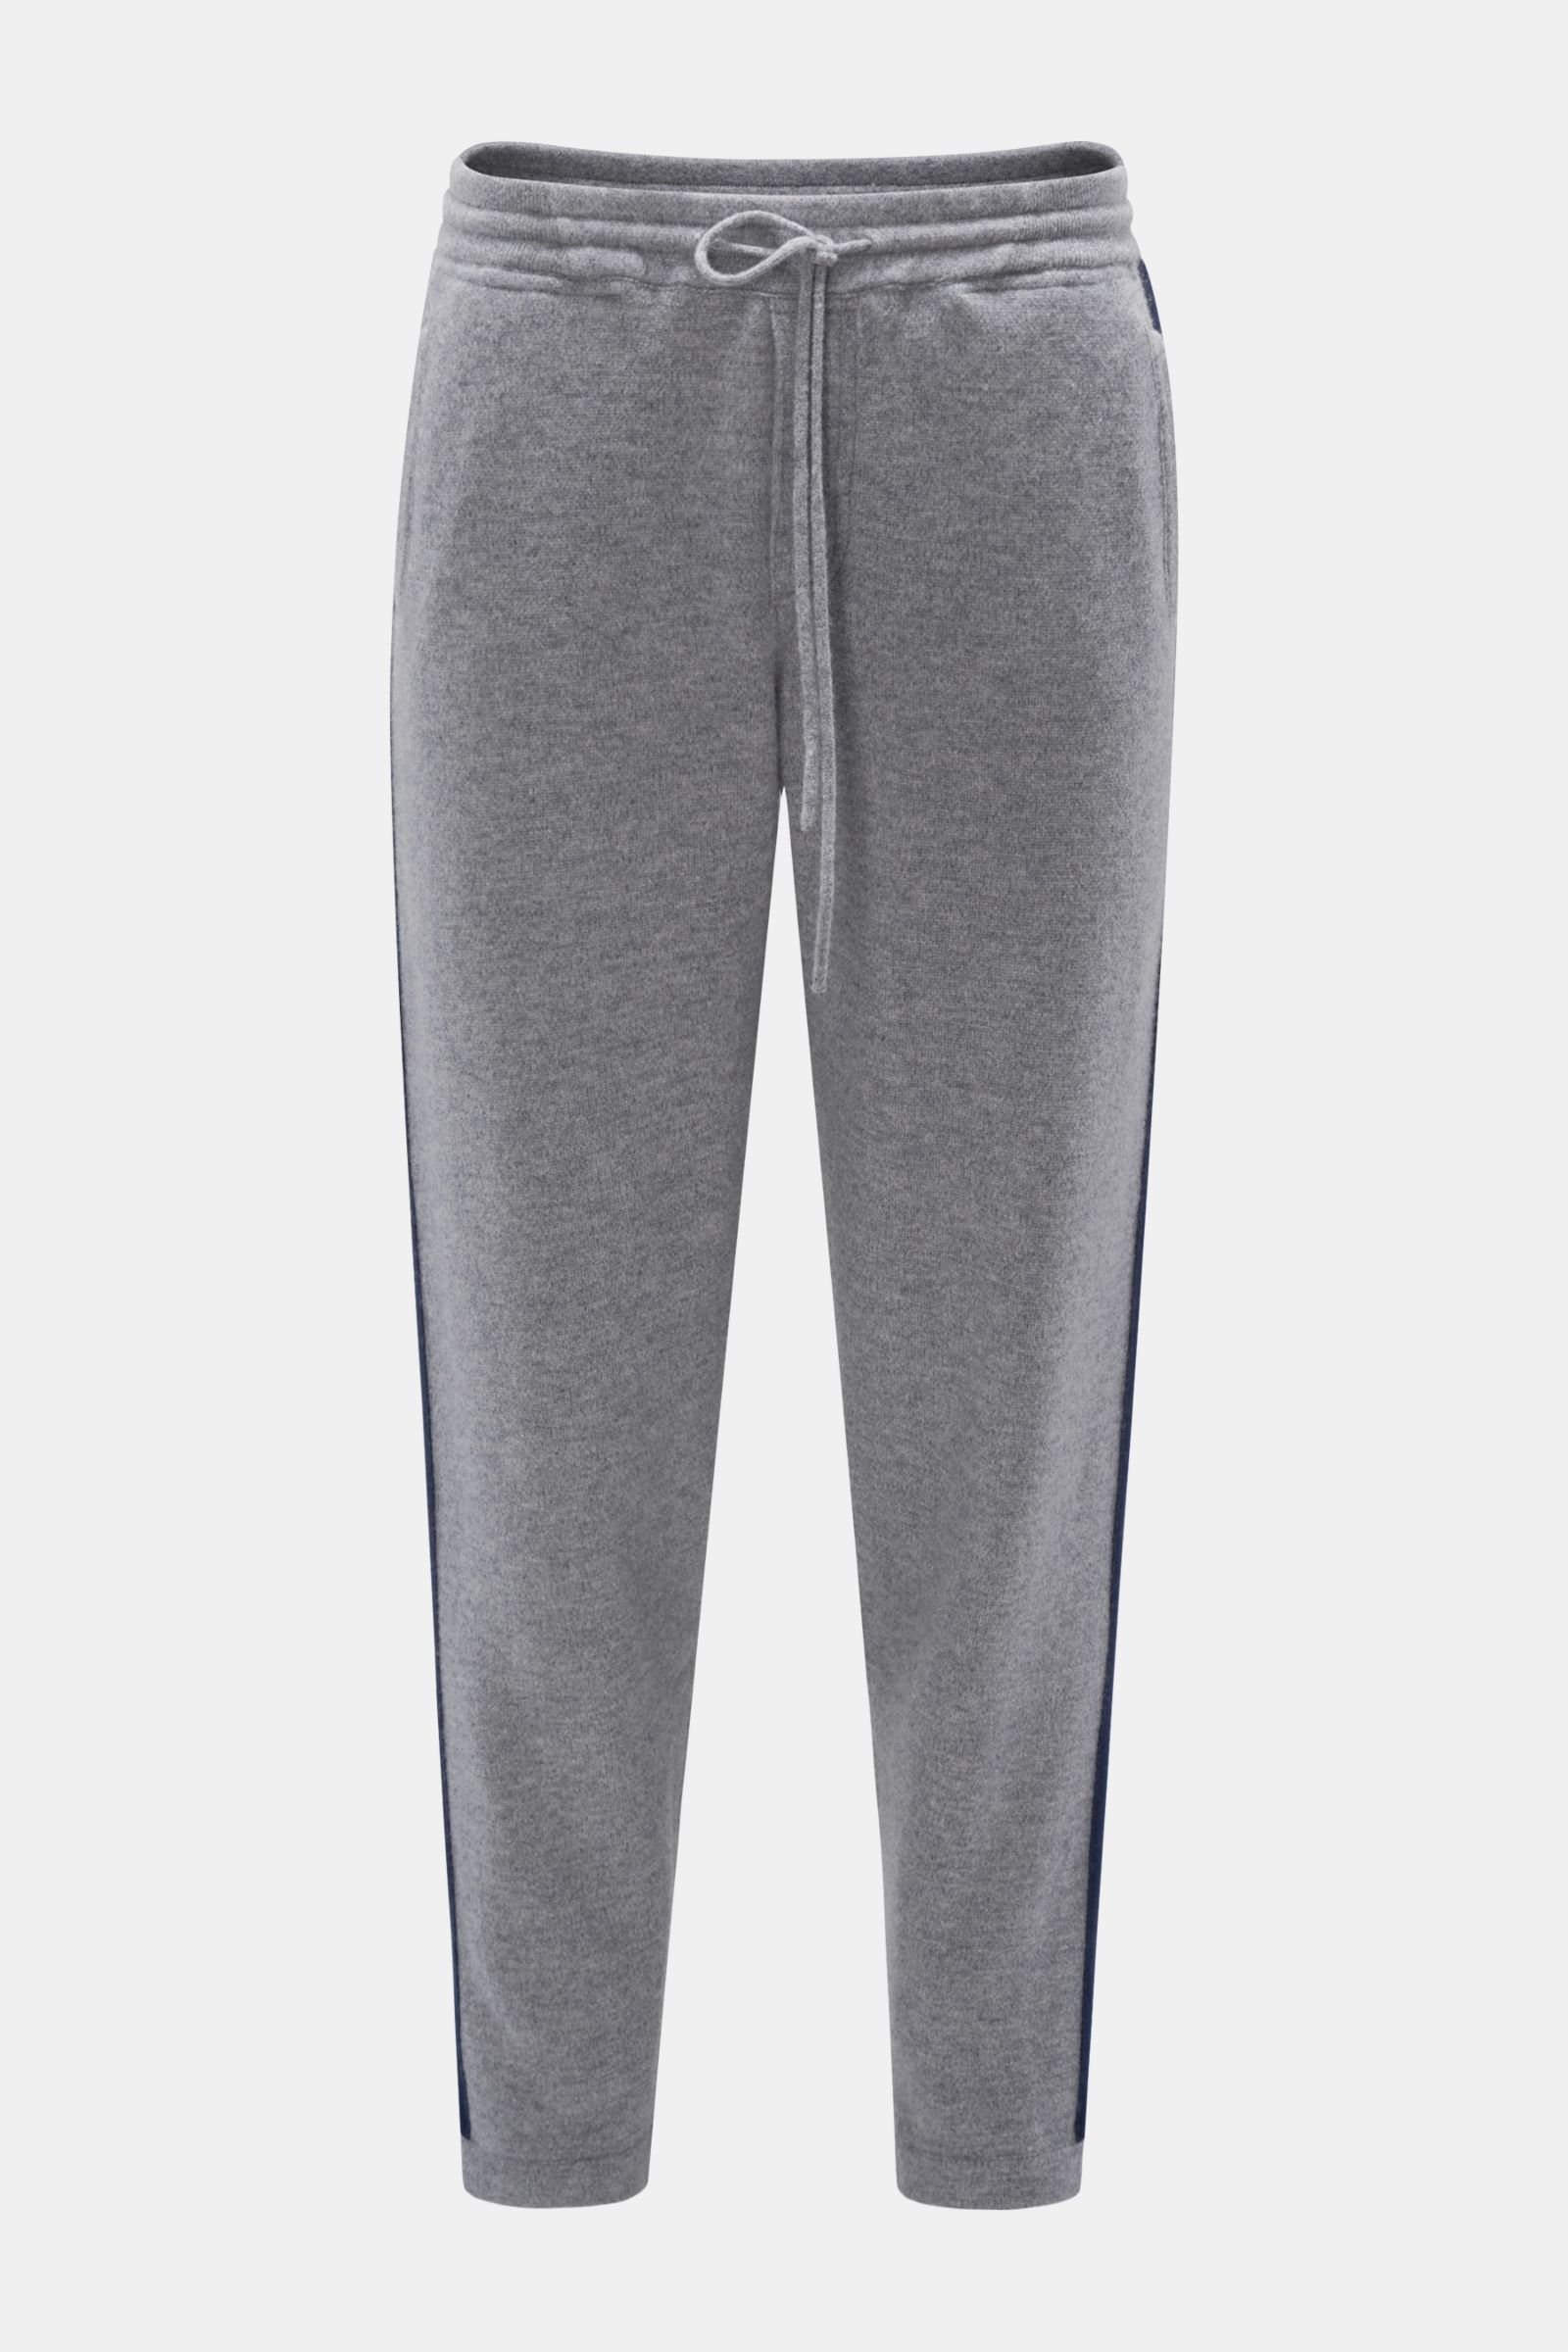 Cashmere jogger pants grey